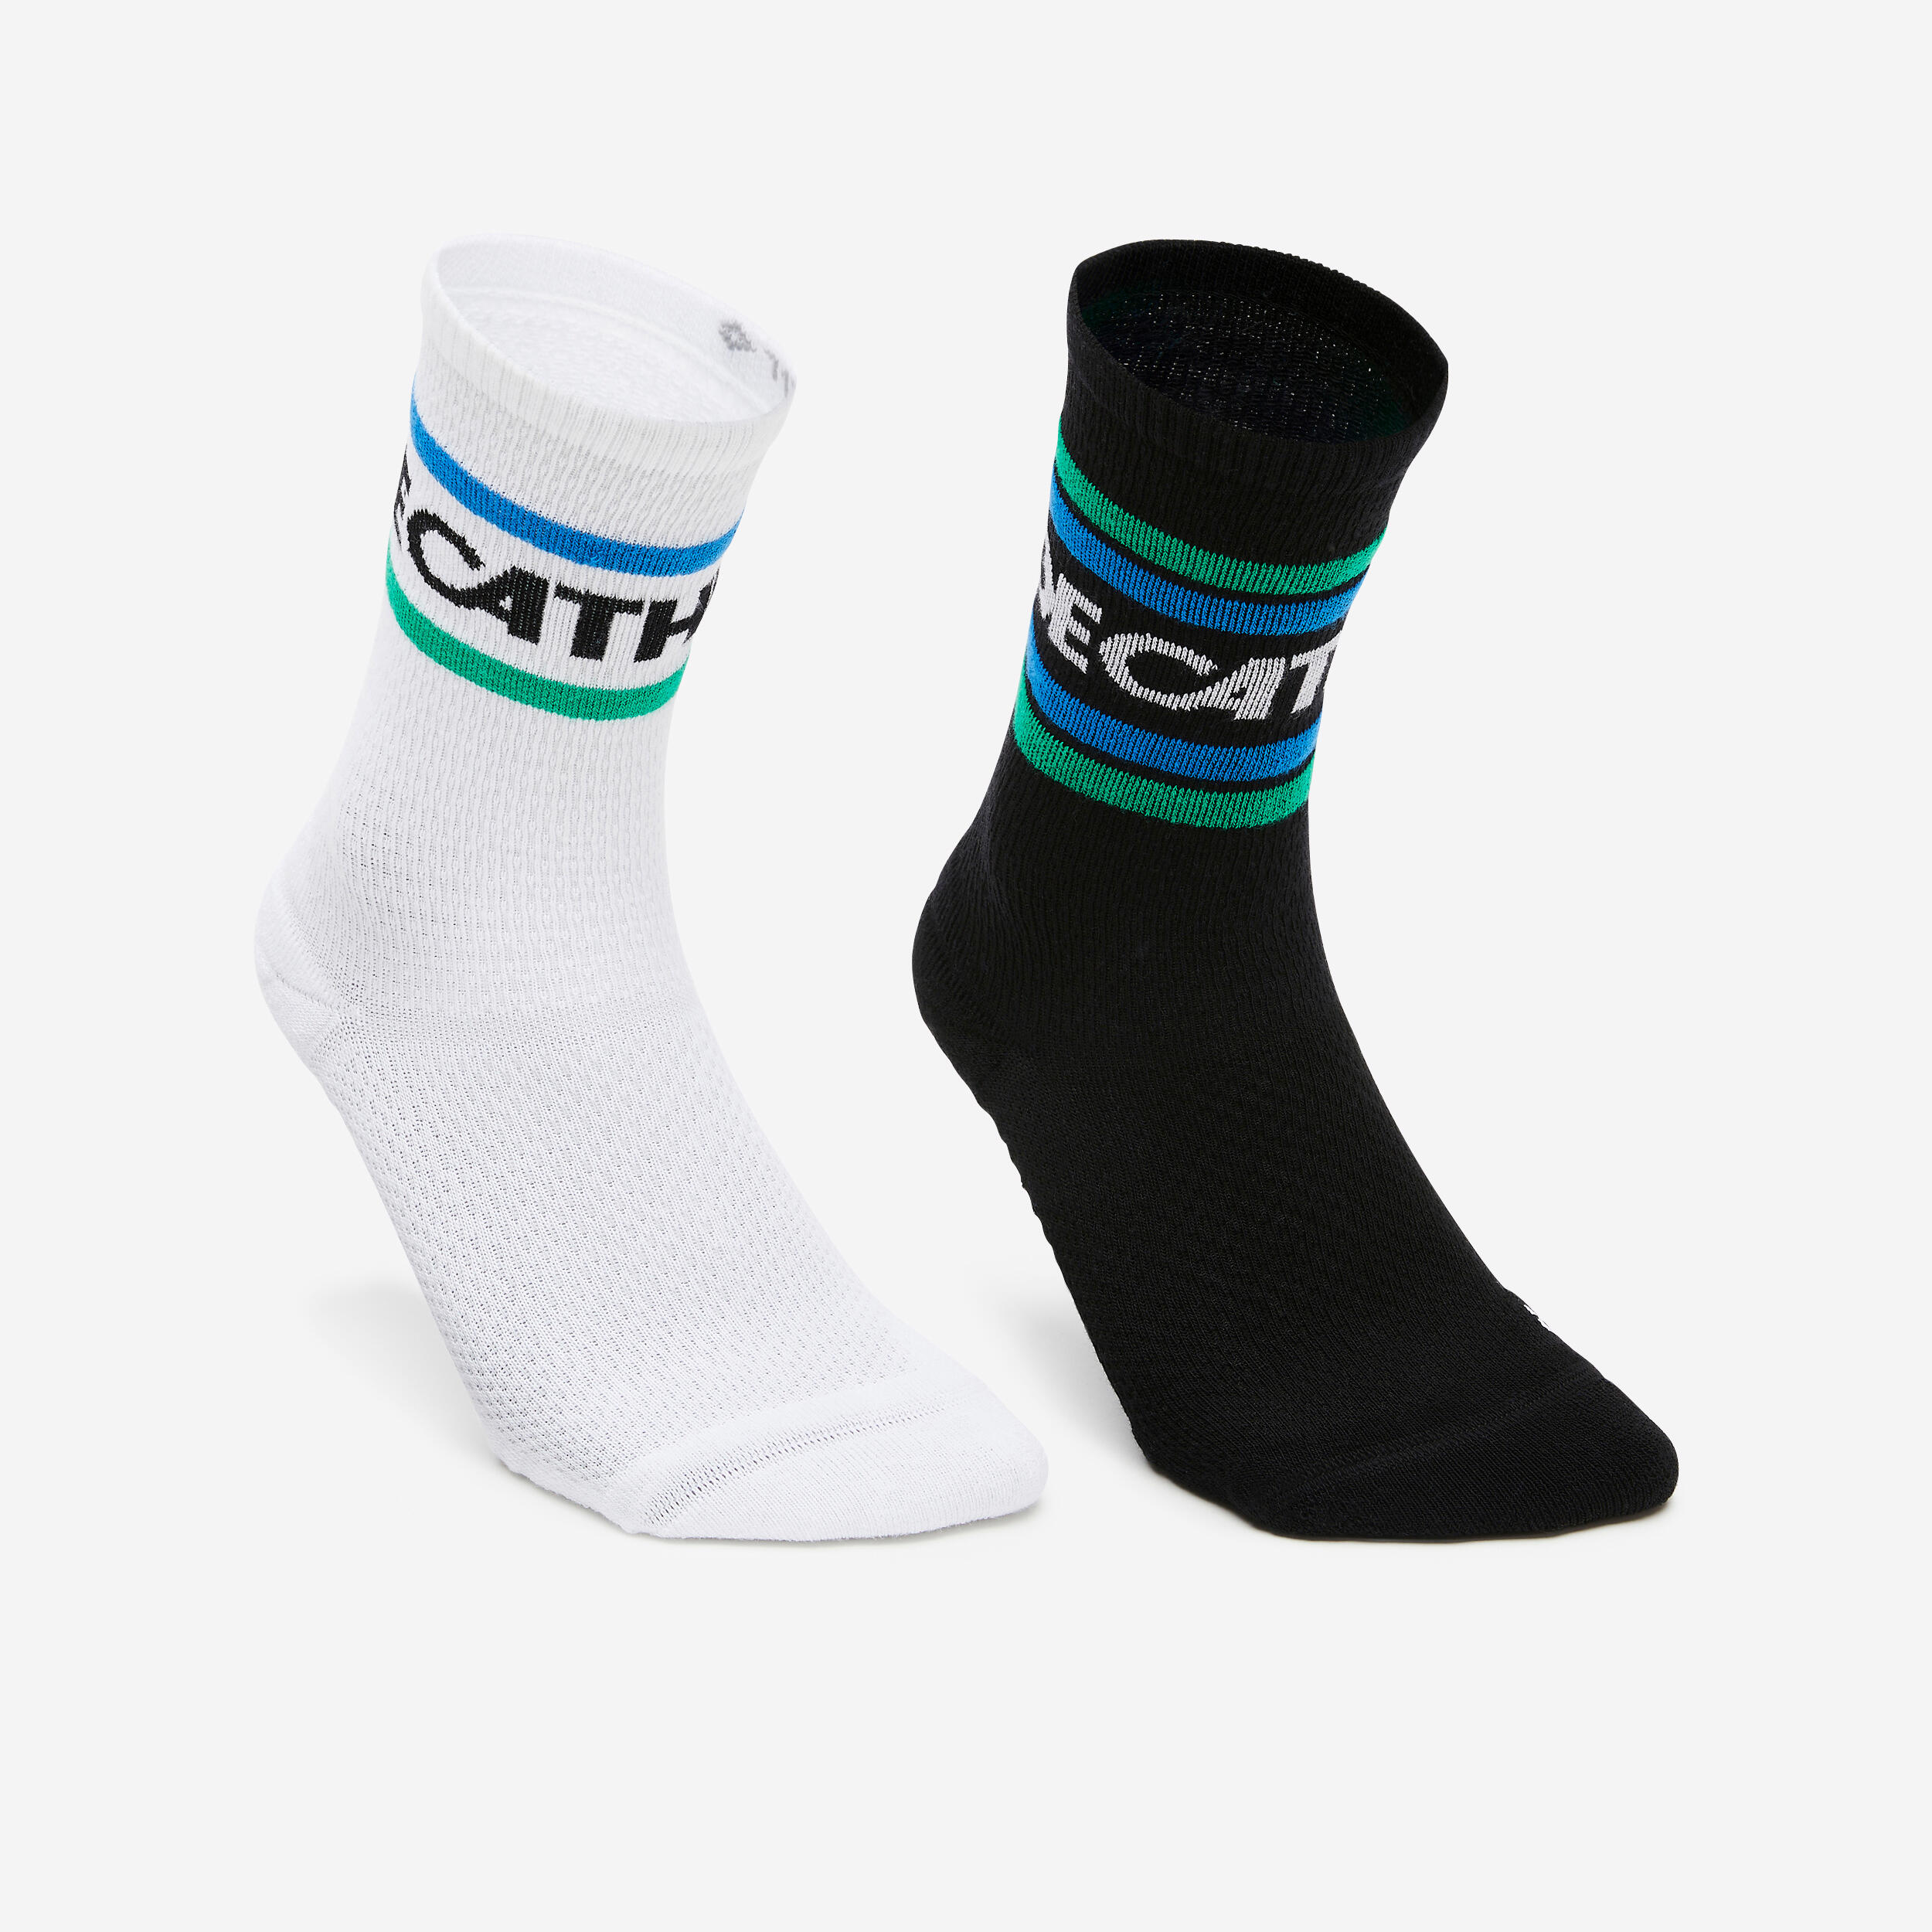 NEWFEEL Sportwear high socks -2-Pair Pack-White/Black Héritage DECATHLON Logo